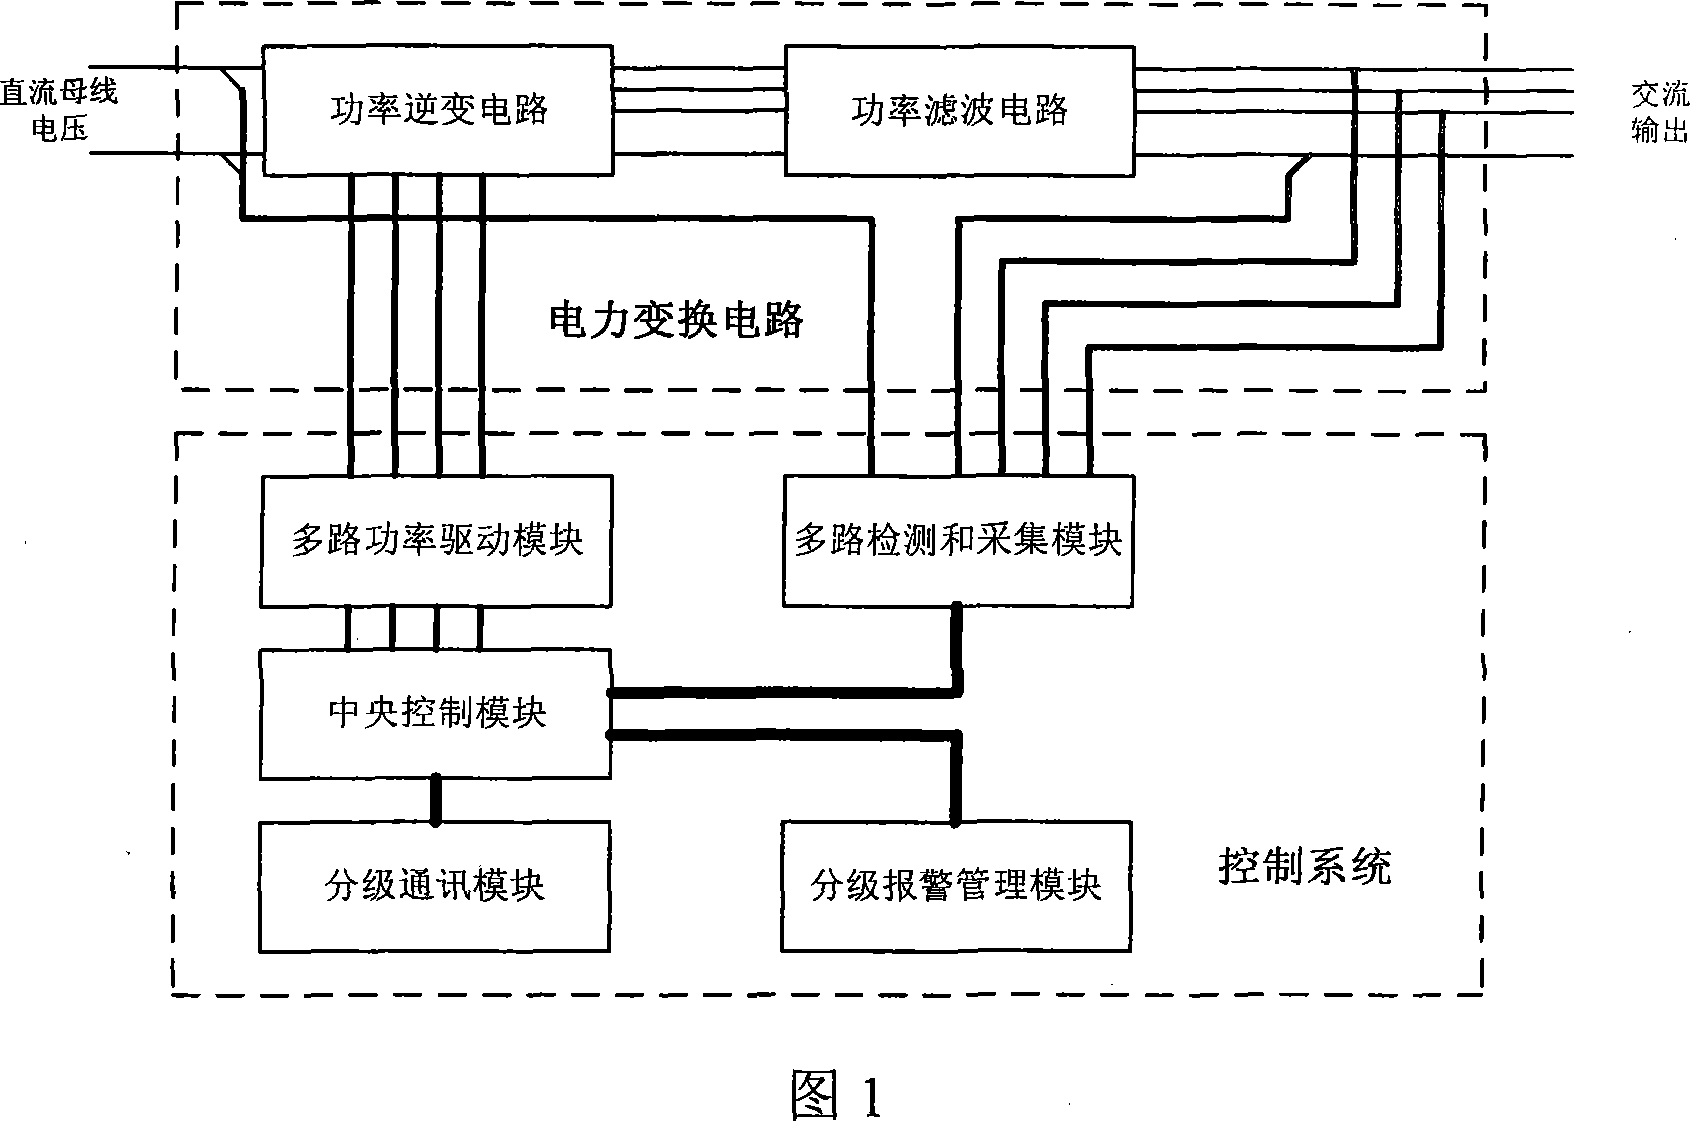 Control method of reverse system